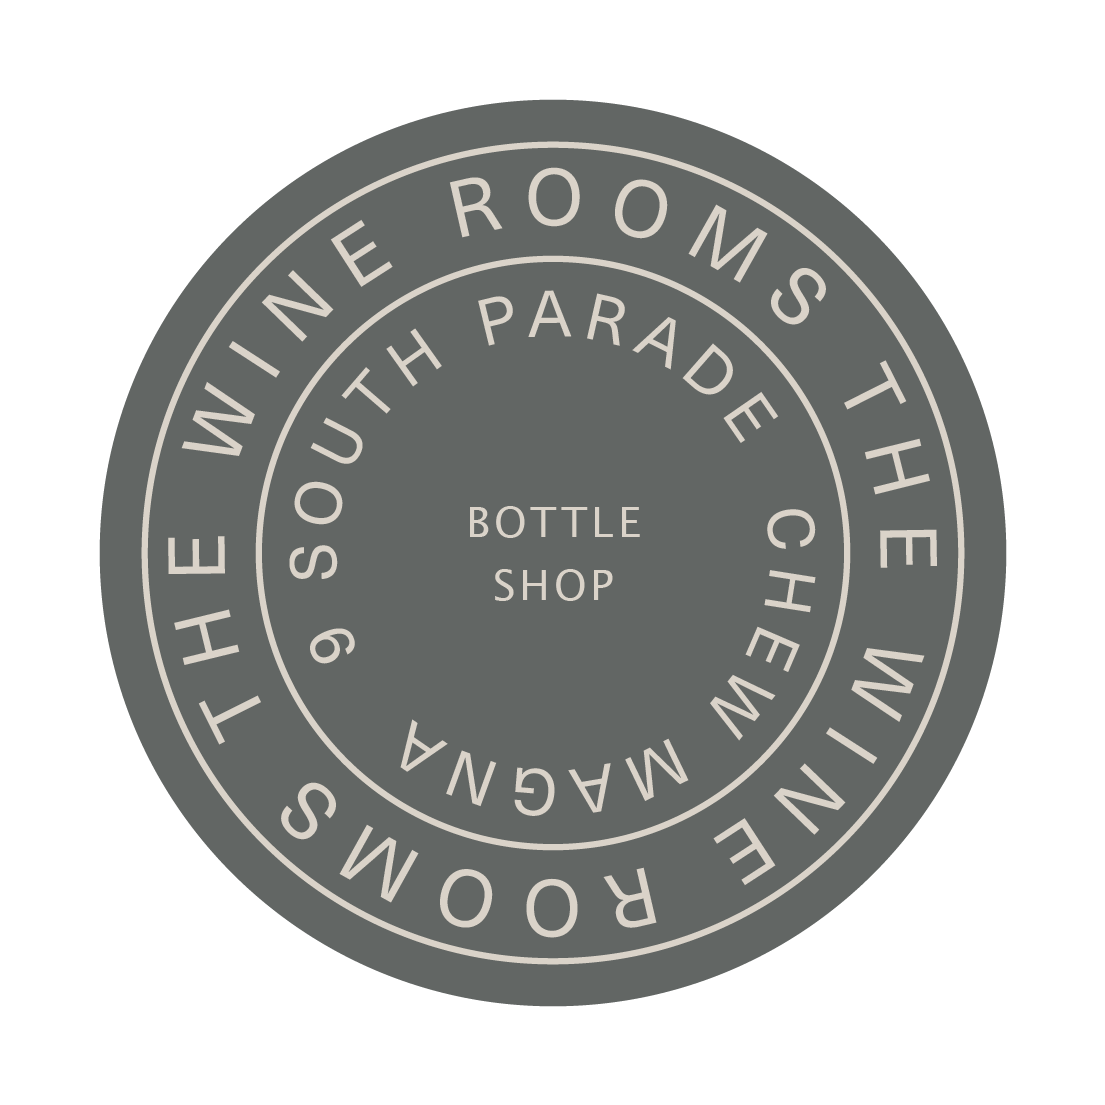 The Wine Rooms Chew Magna